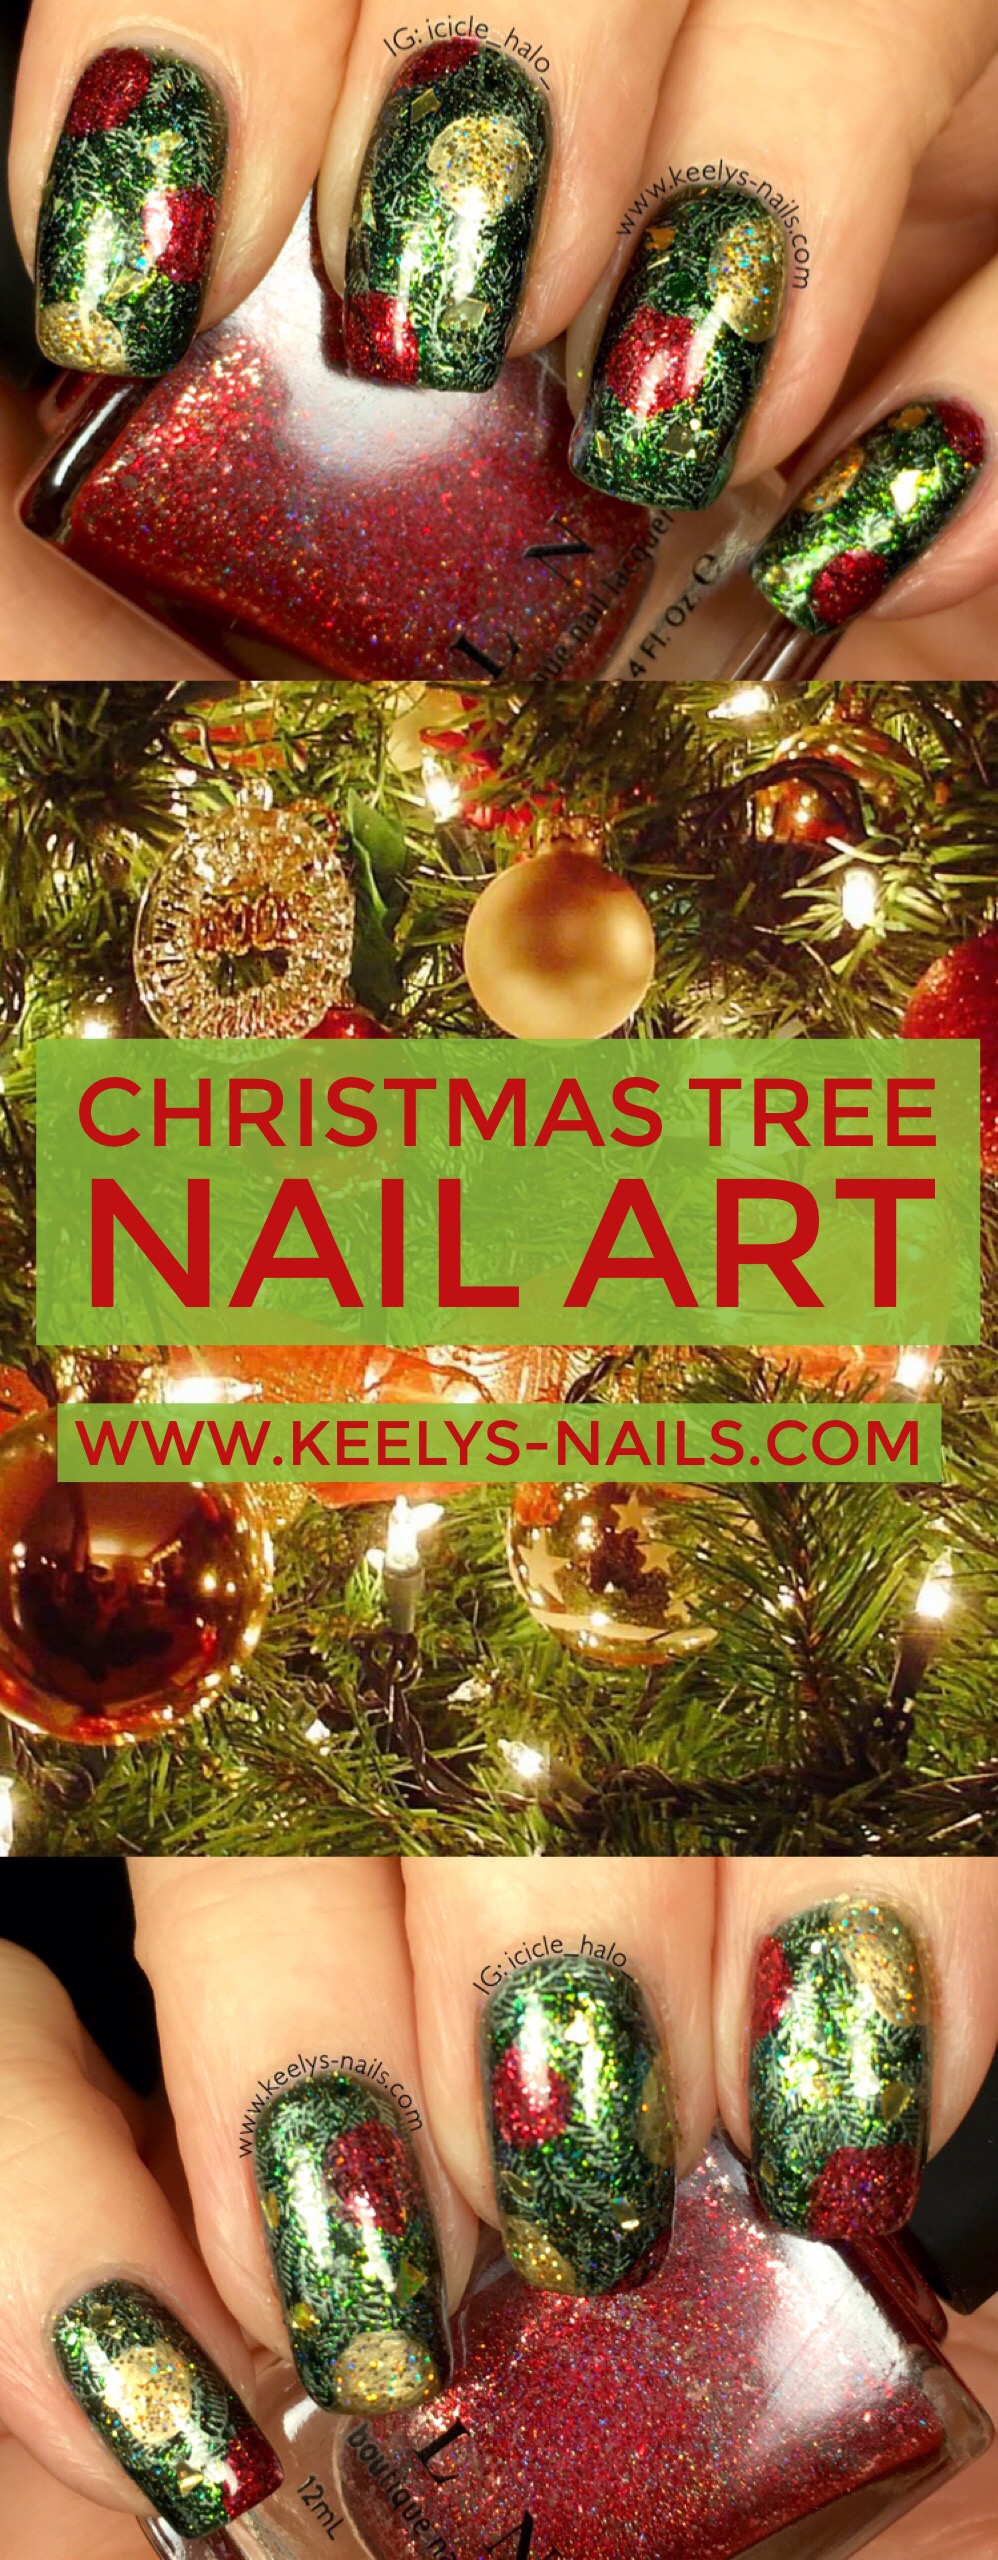 Christmas Tree Nails - Keely's Nails